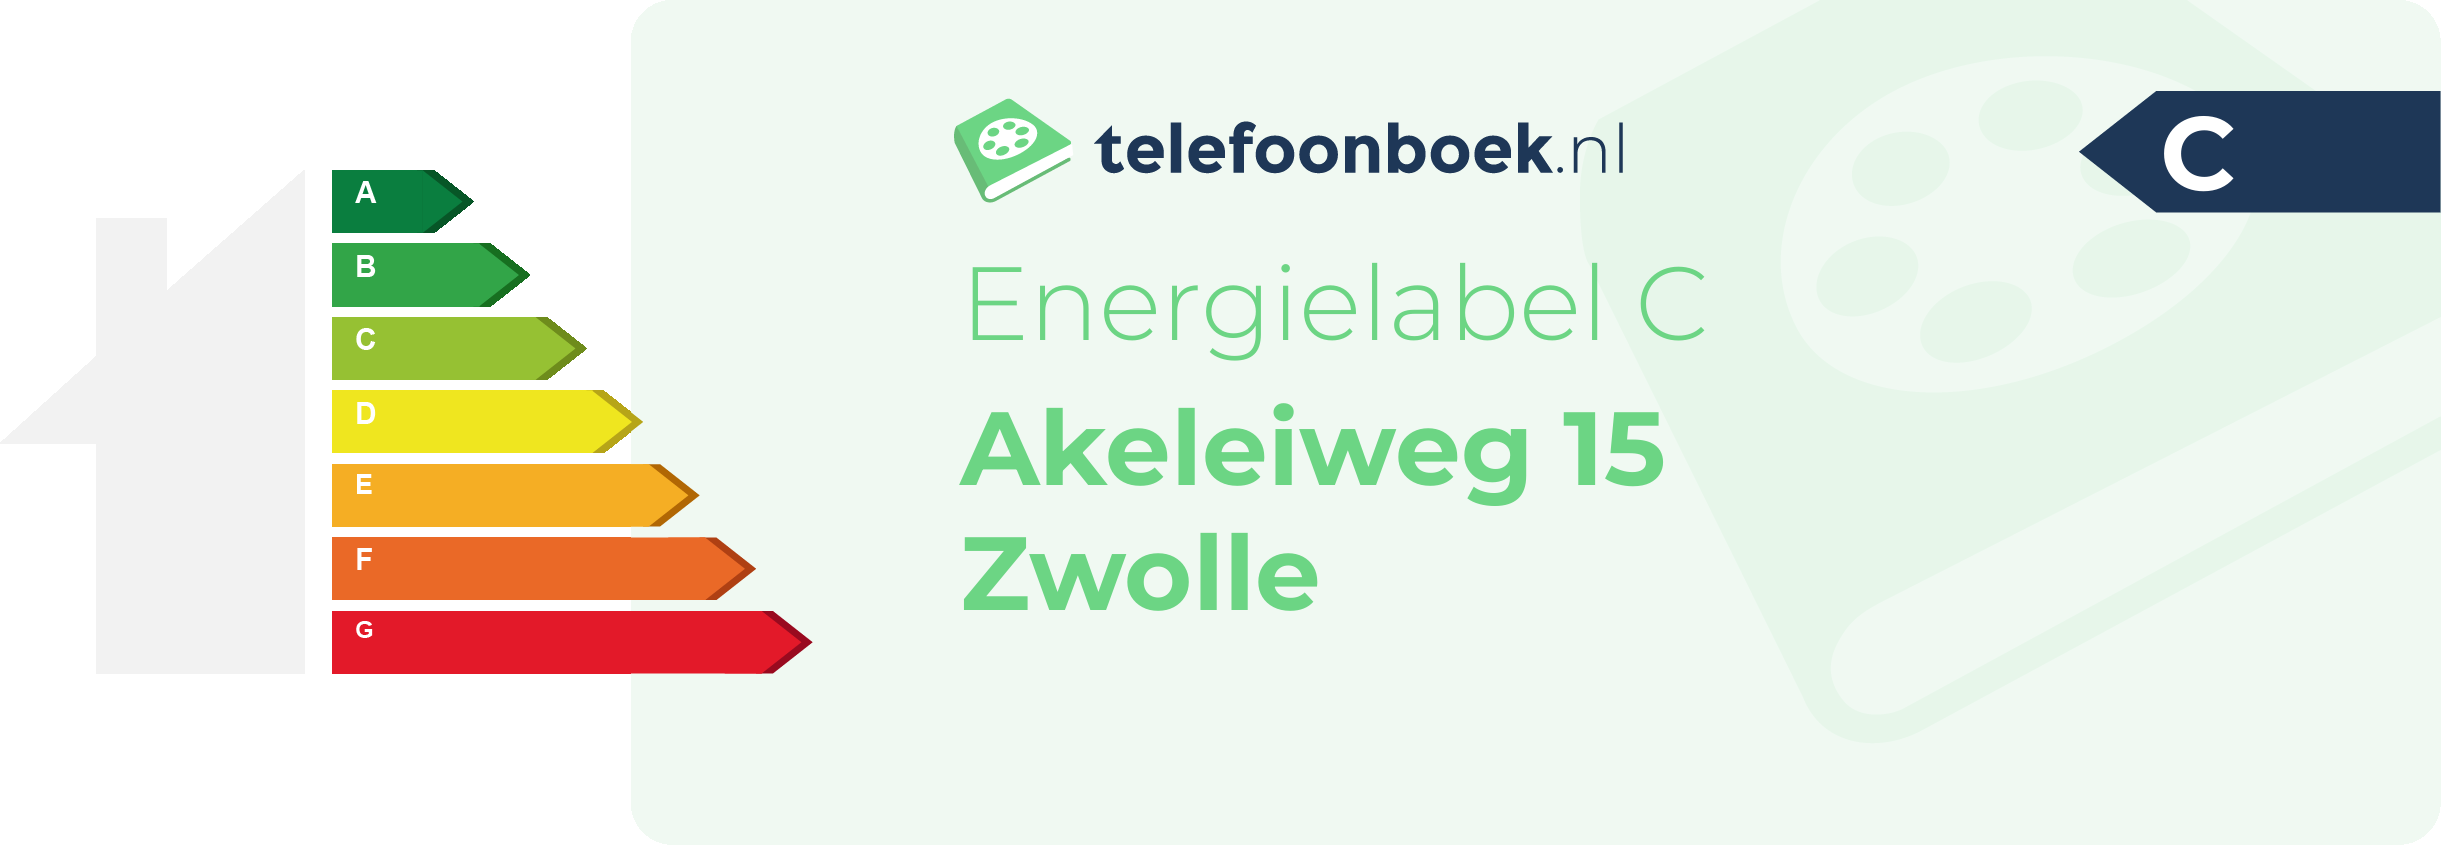 Energielabel Akeleiweg 15 Zwolle